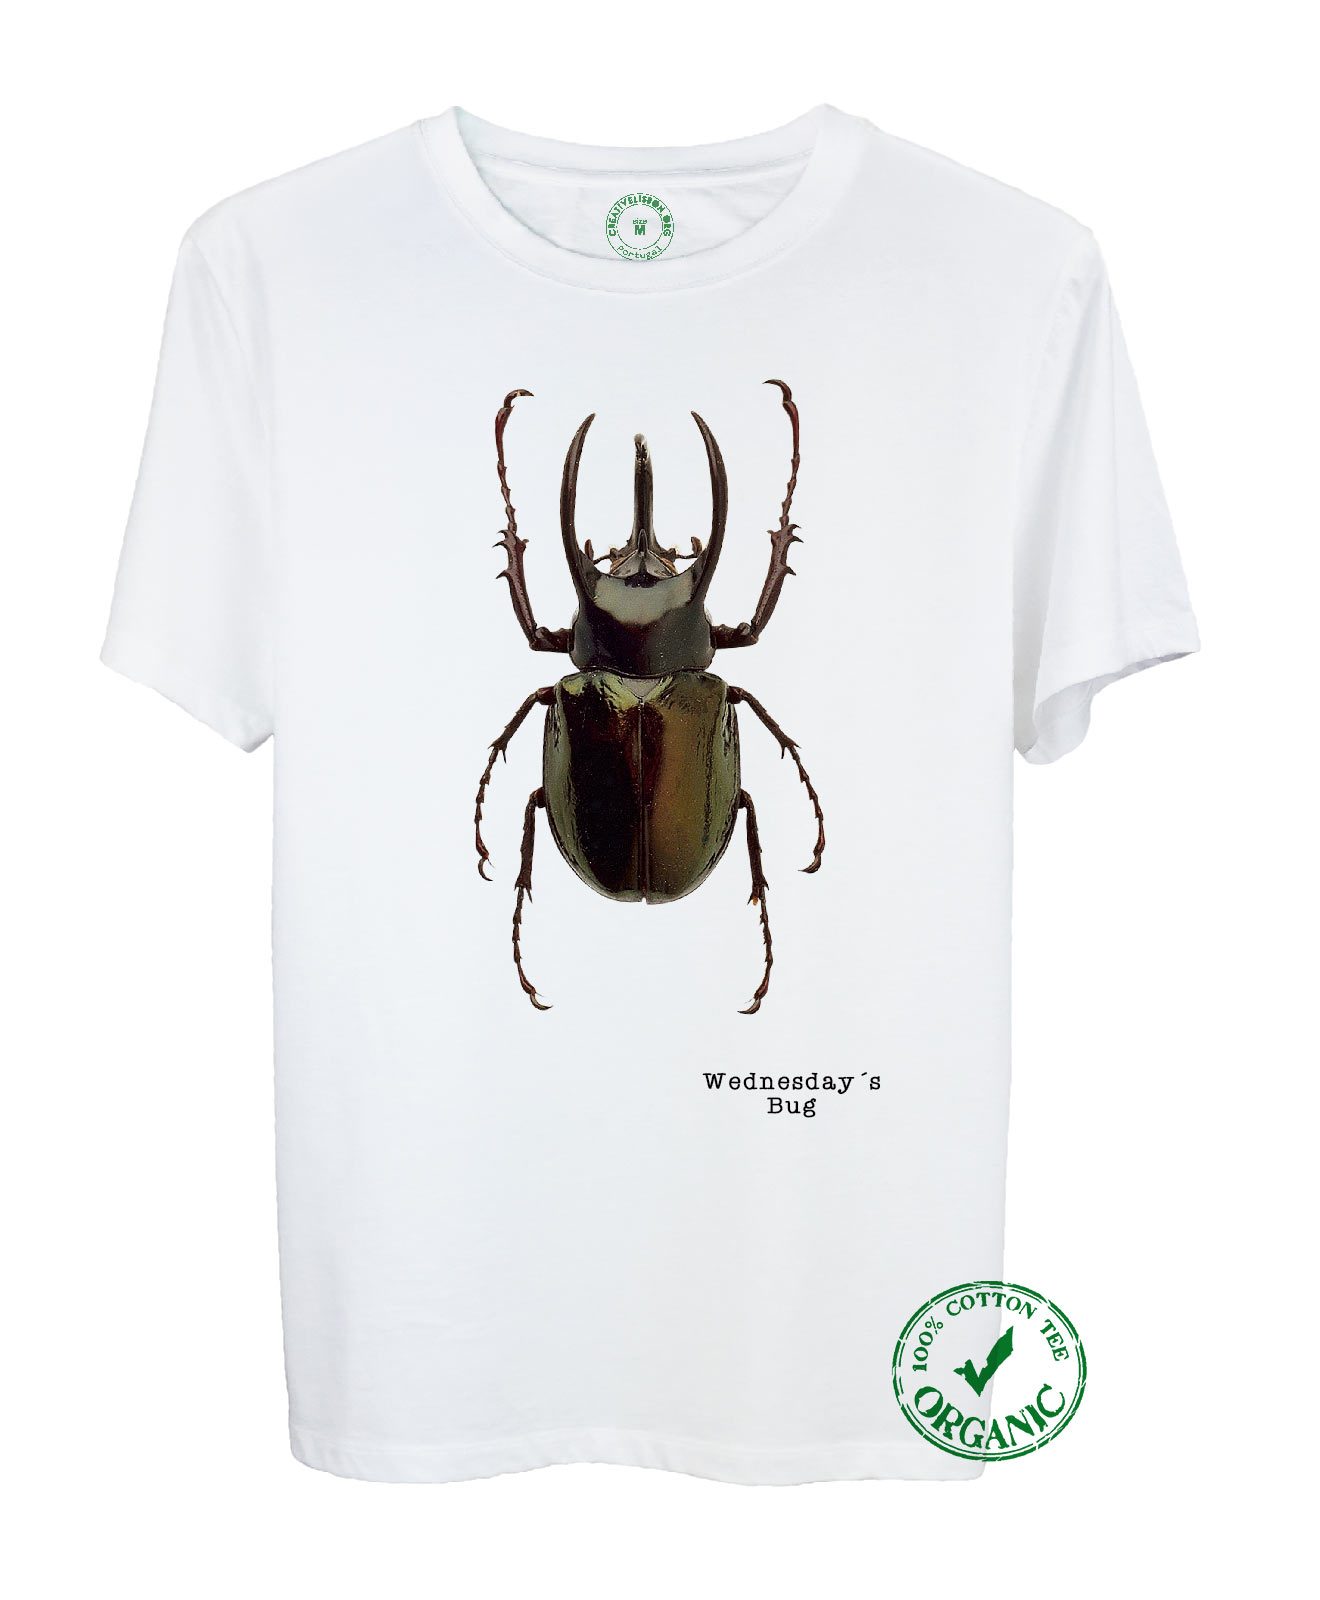 Wednesday Bug Organic T-shirt